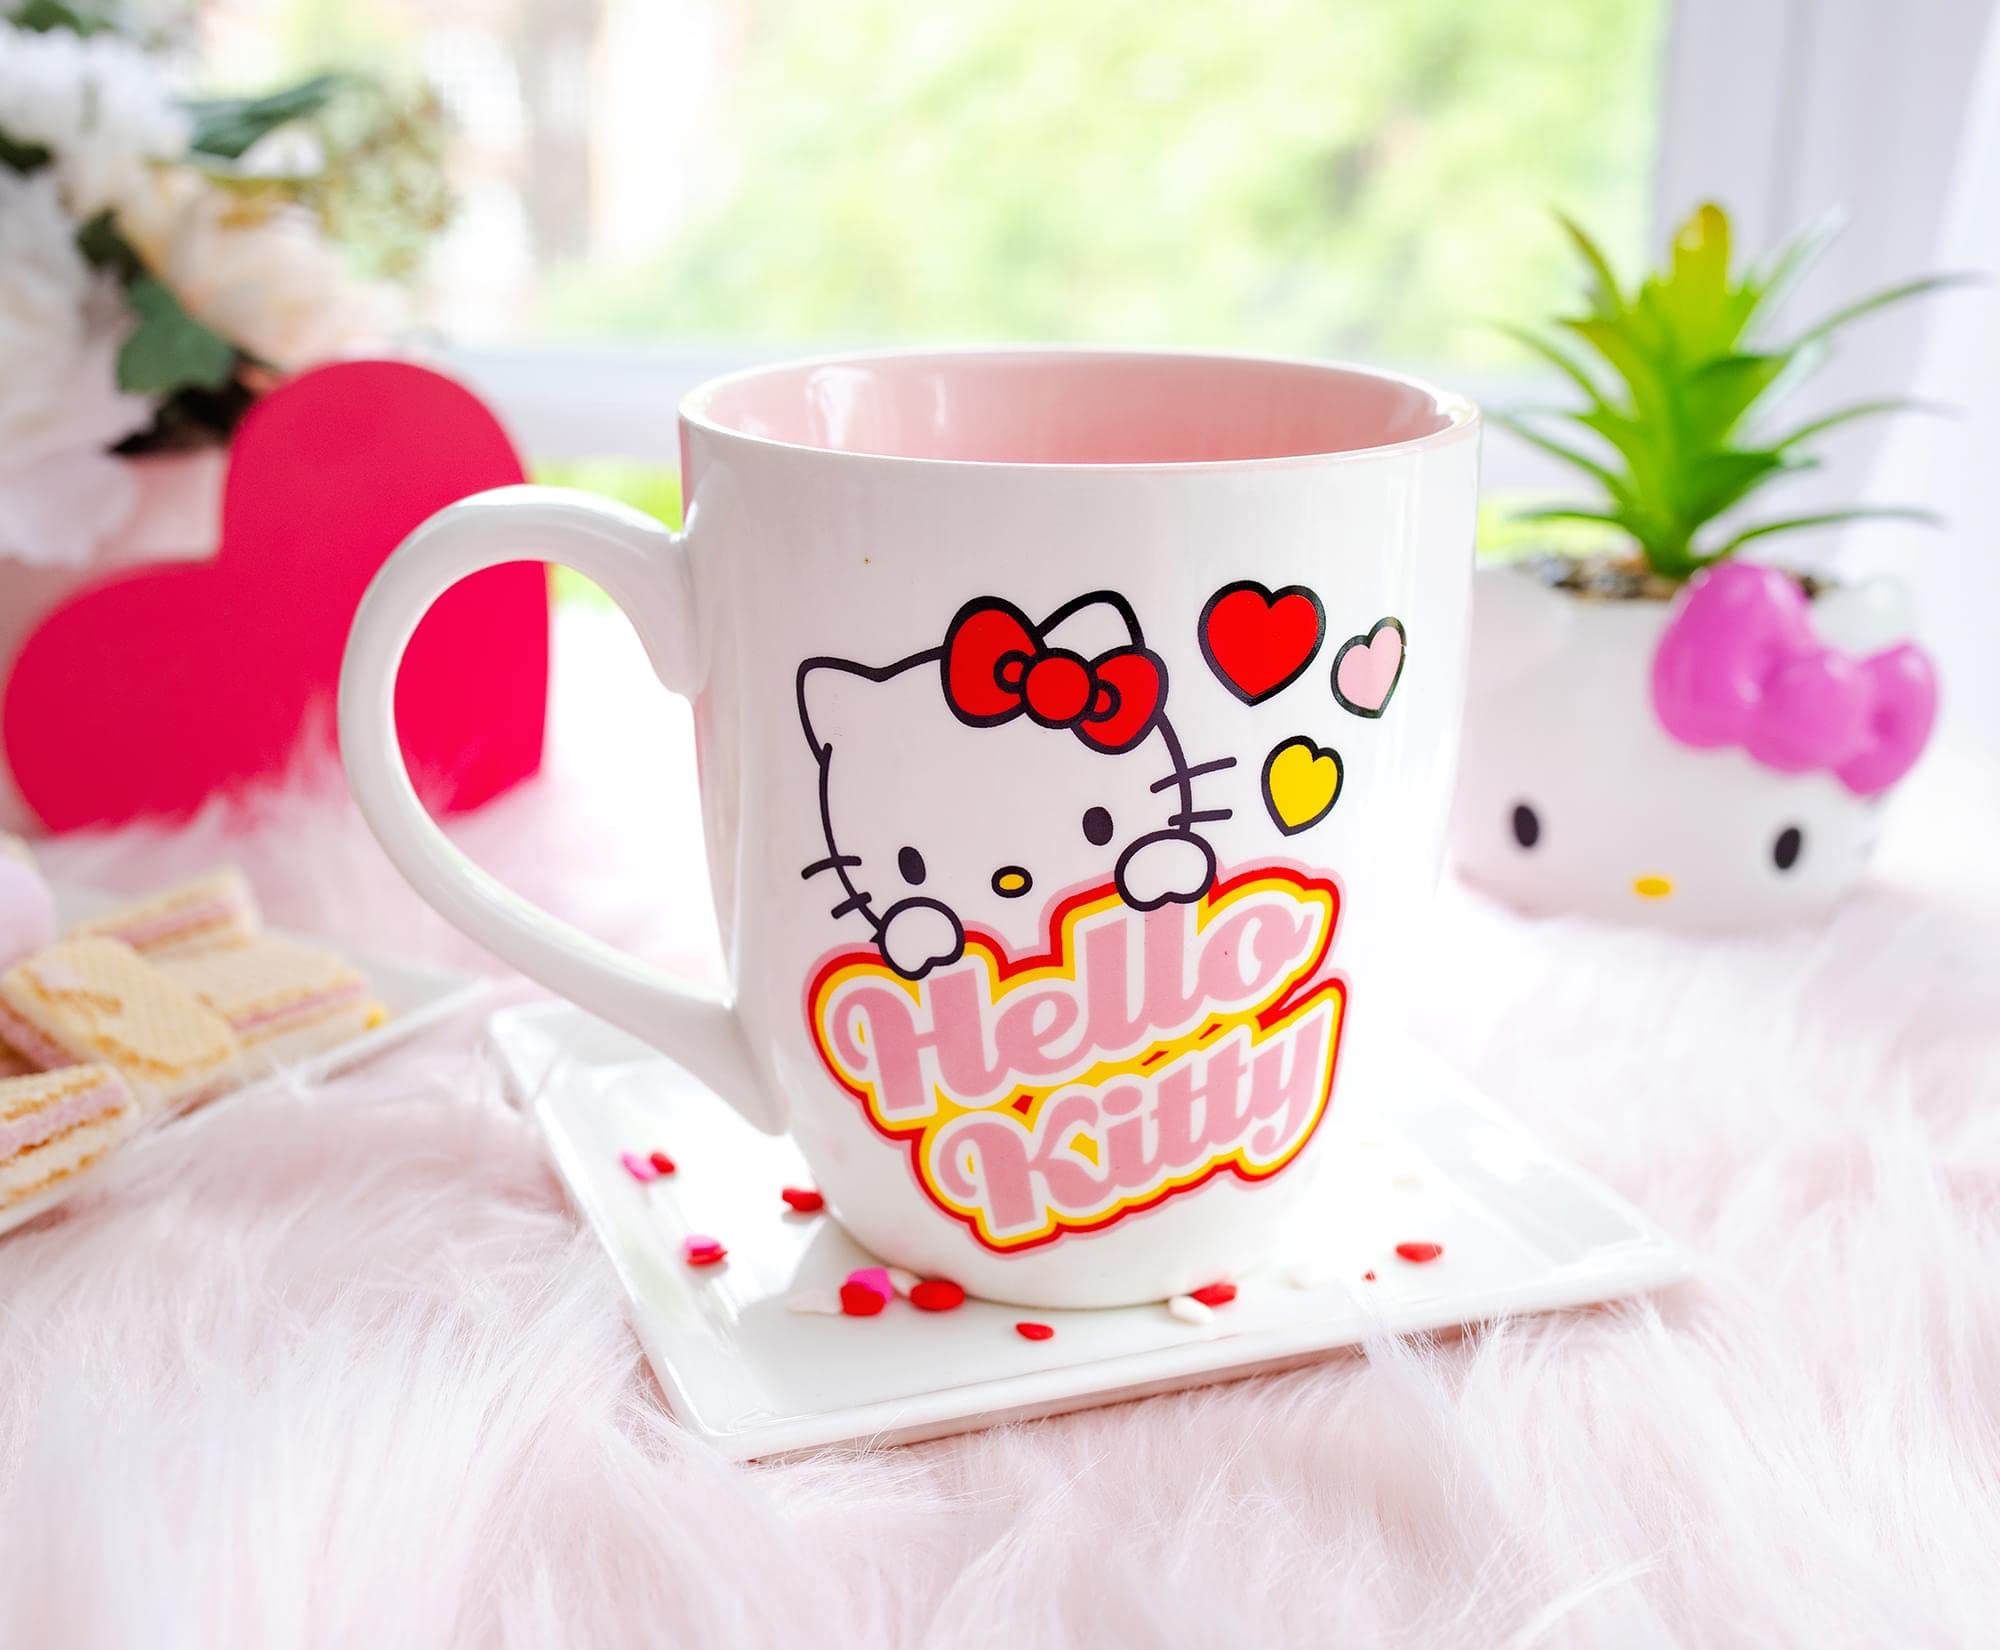 Silver Buffalo Sanrio Hello Kitty Hearts Ceramic Mug | Holds 18 Ounces